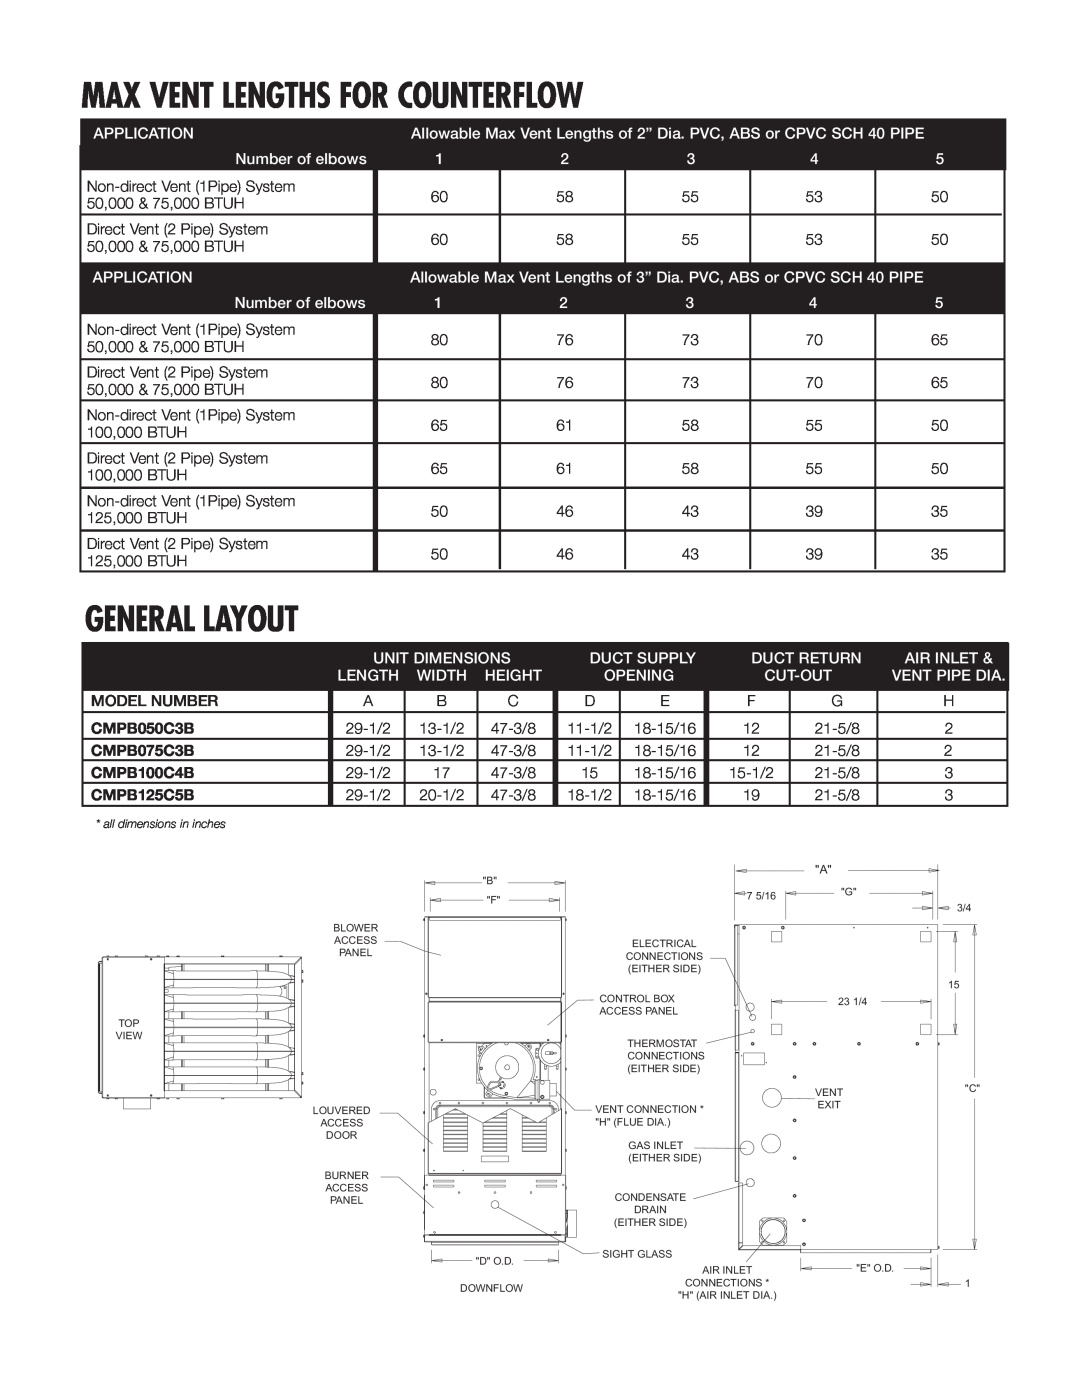 Ducane Fits-All 92 Max Vent Lengths For Counterflow, General Layout, CMPB050C3B, CMPB075C3B, CMPB100C4B, CMPB125C5B 